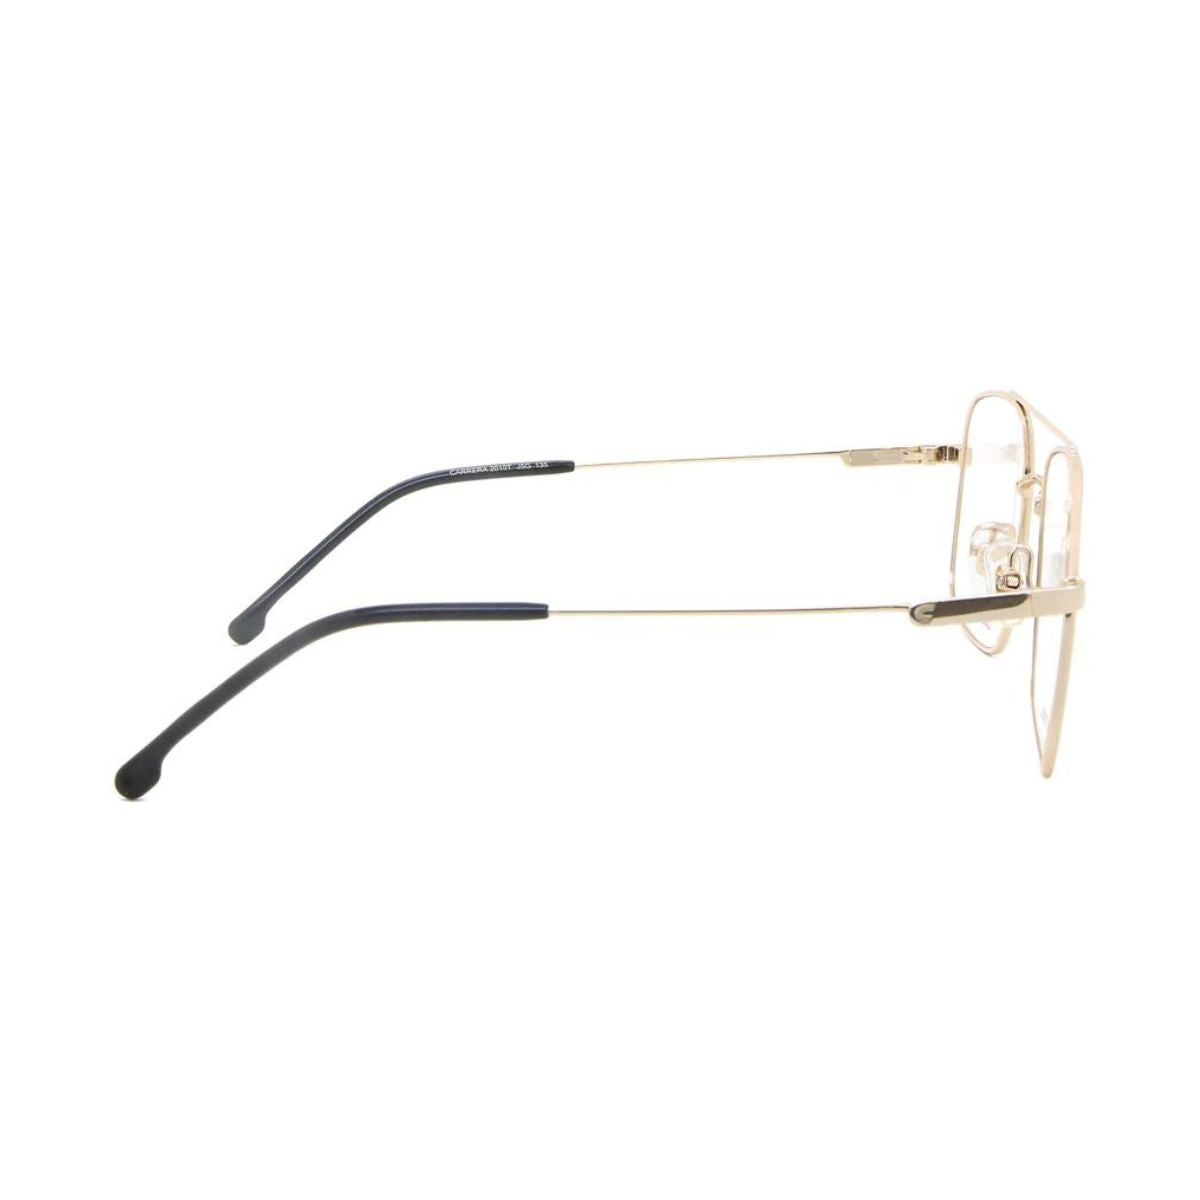 "shop Carrera 2010T J5G eyesight & prescription glasses frame for men's at optorium"